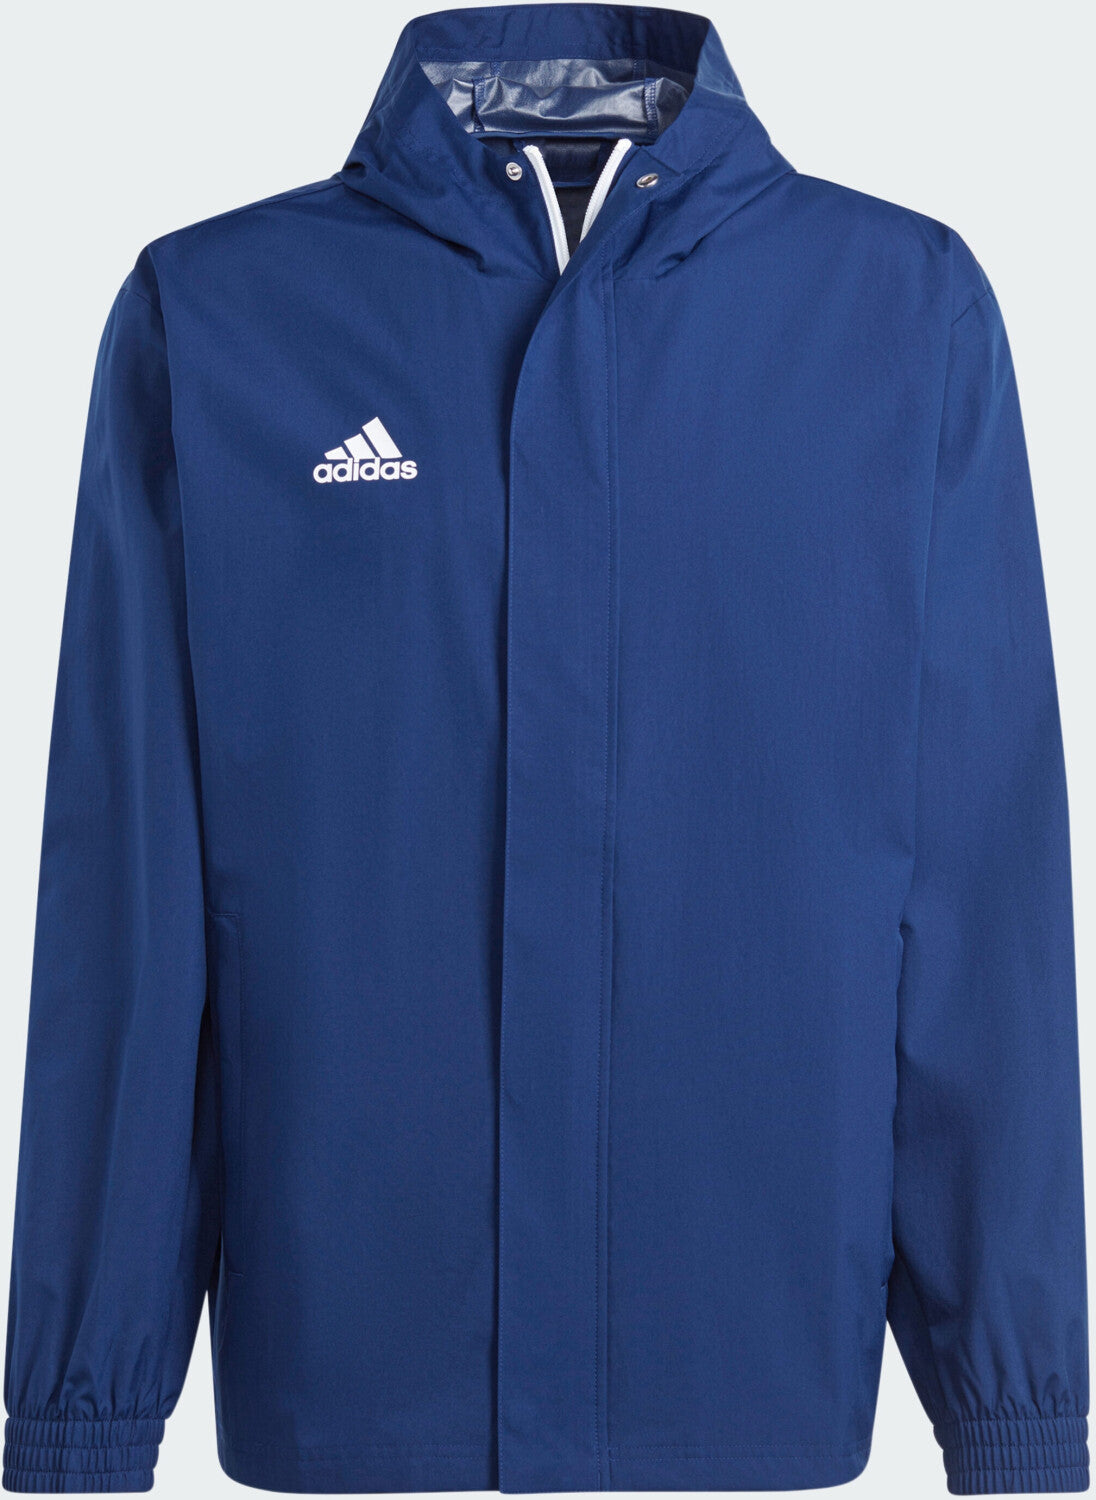 AA-G23 (Adidas entrada 22 all weather training jacket team navy blue) 32496251